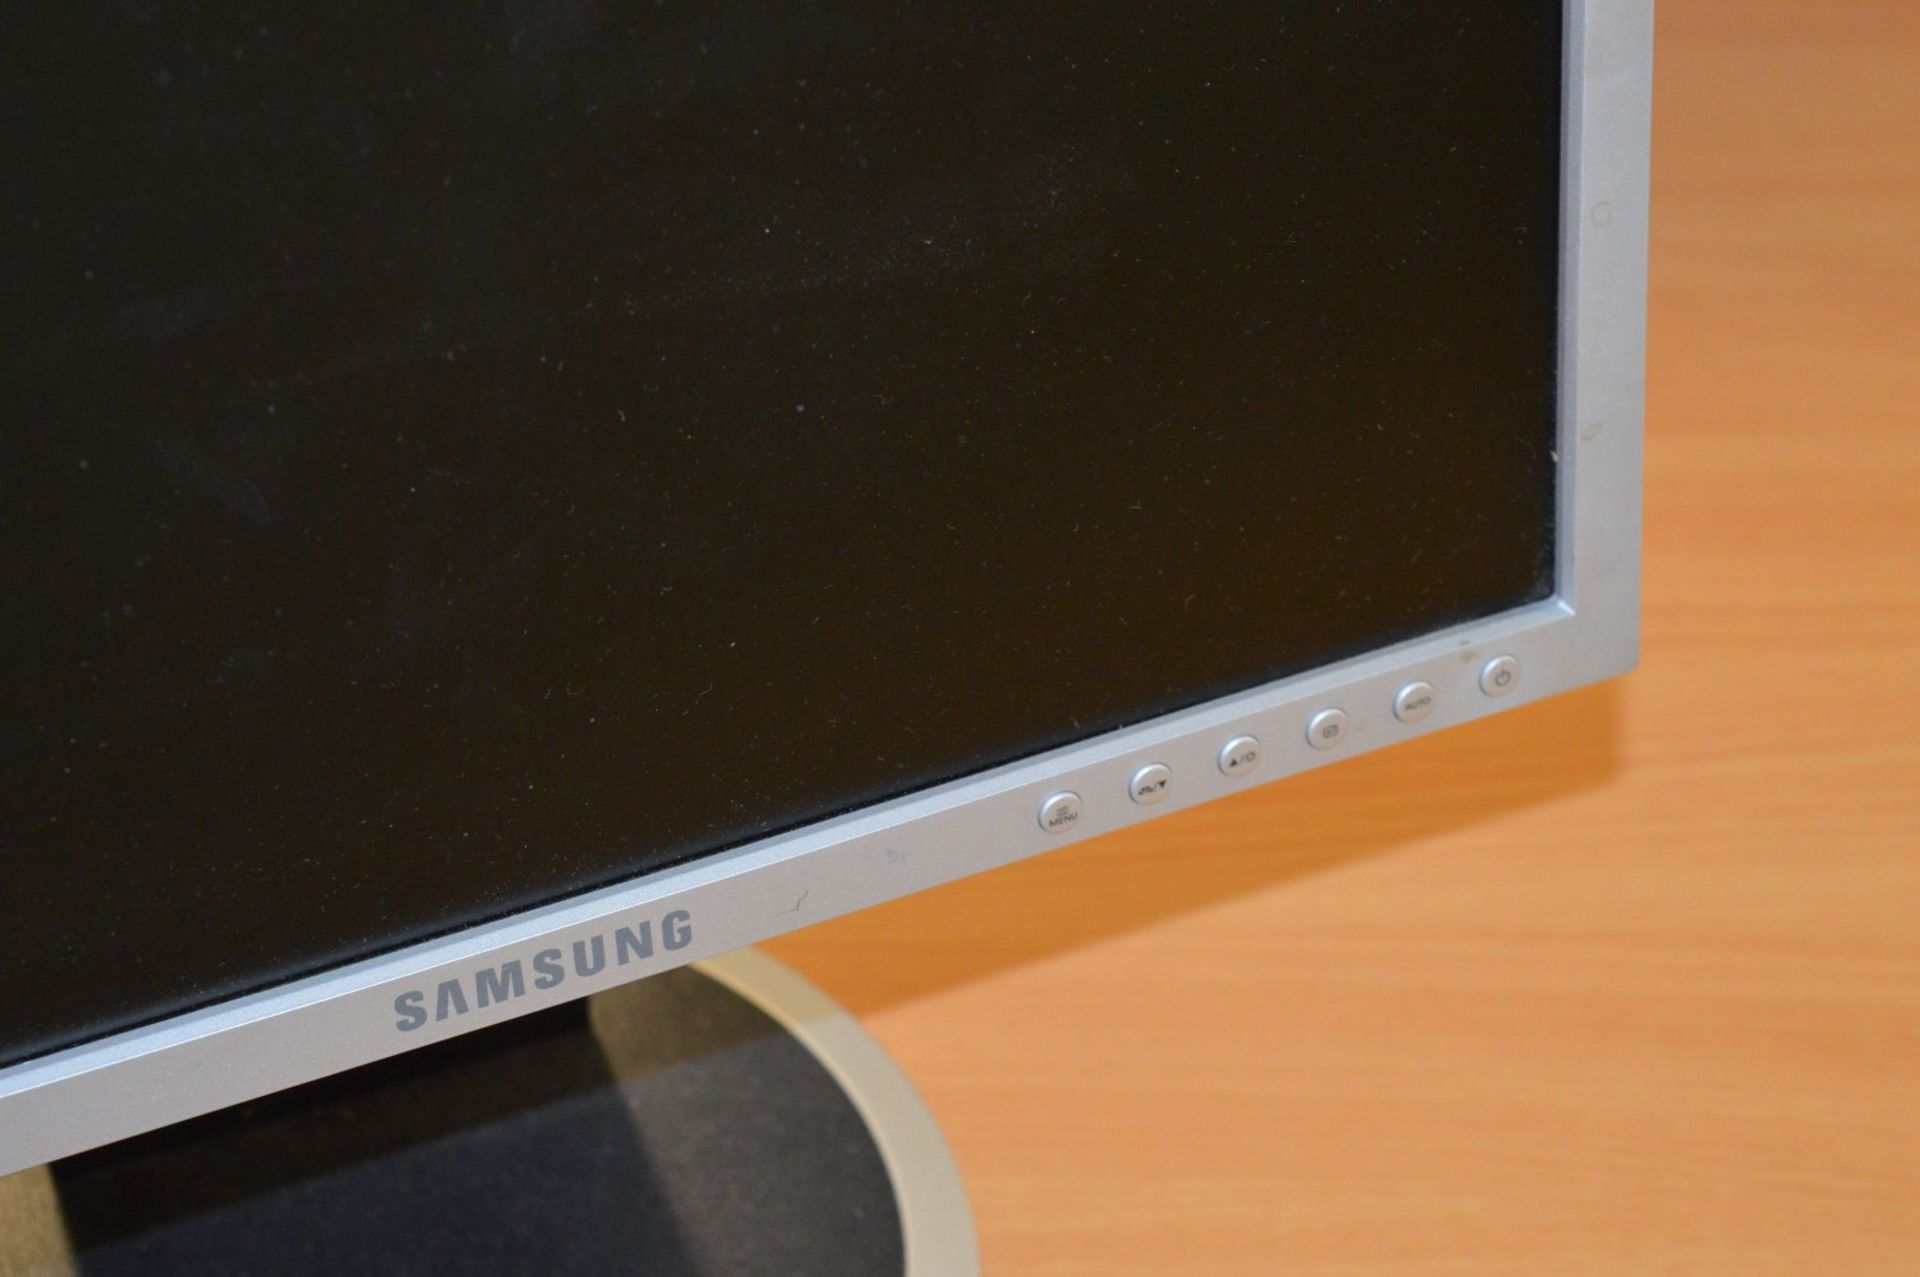 1 x Samsung Syncmaster 740B Flatscreen LCD Monitor - 17 Inch Screen Size - 1280 x 1024 Native - Image 5 of 8